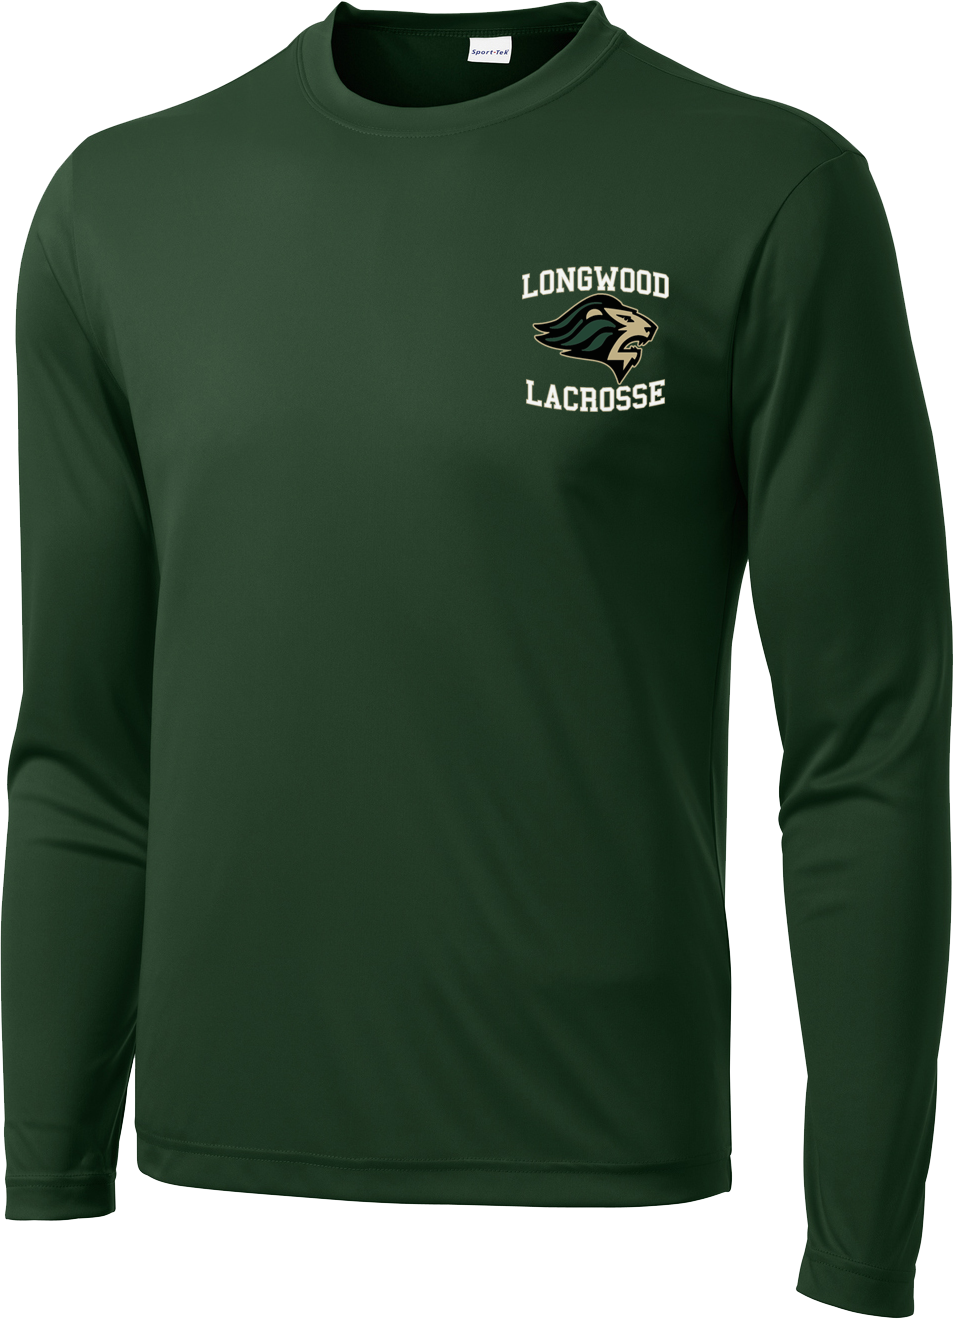 Longwood Lacrosse Green Long Sleeve Performance Shirt